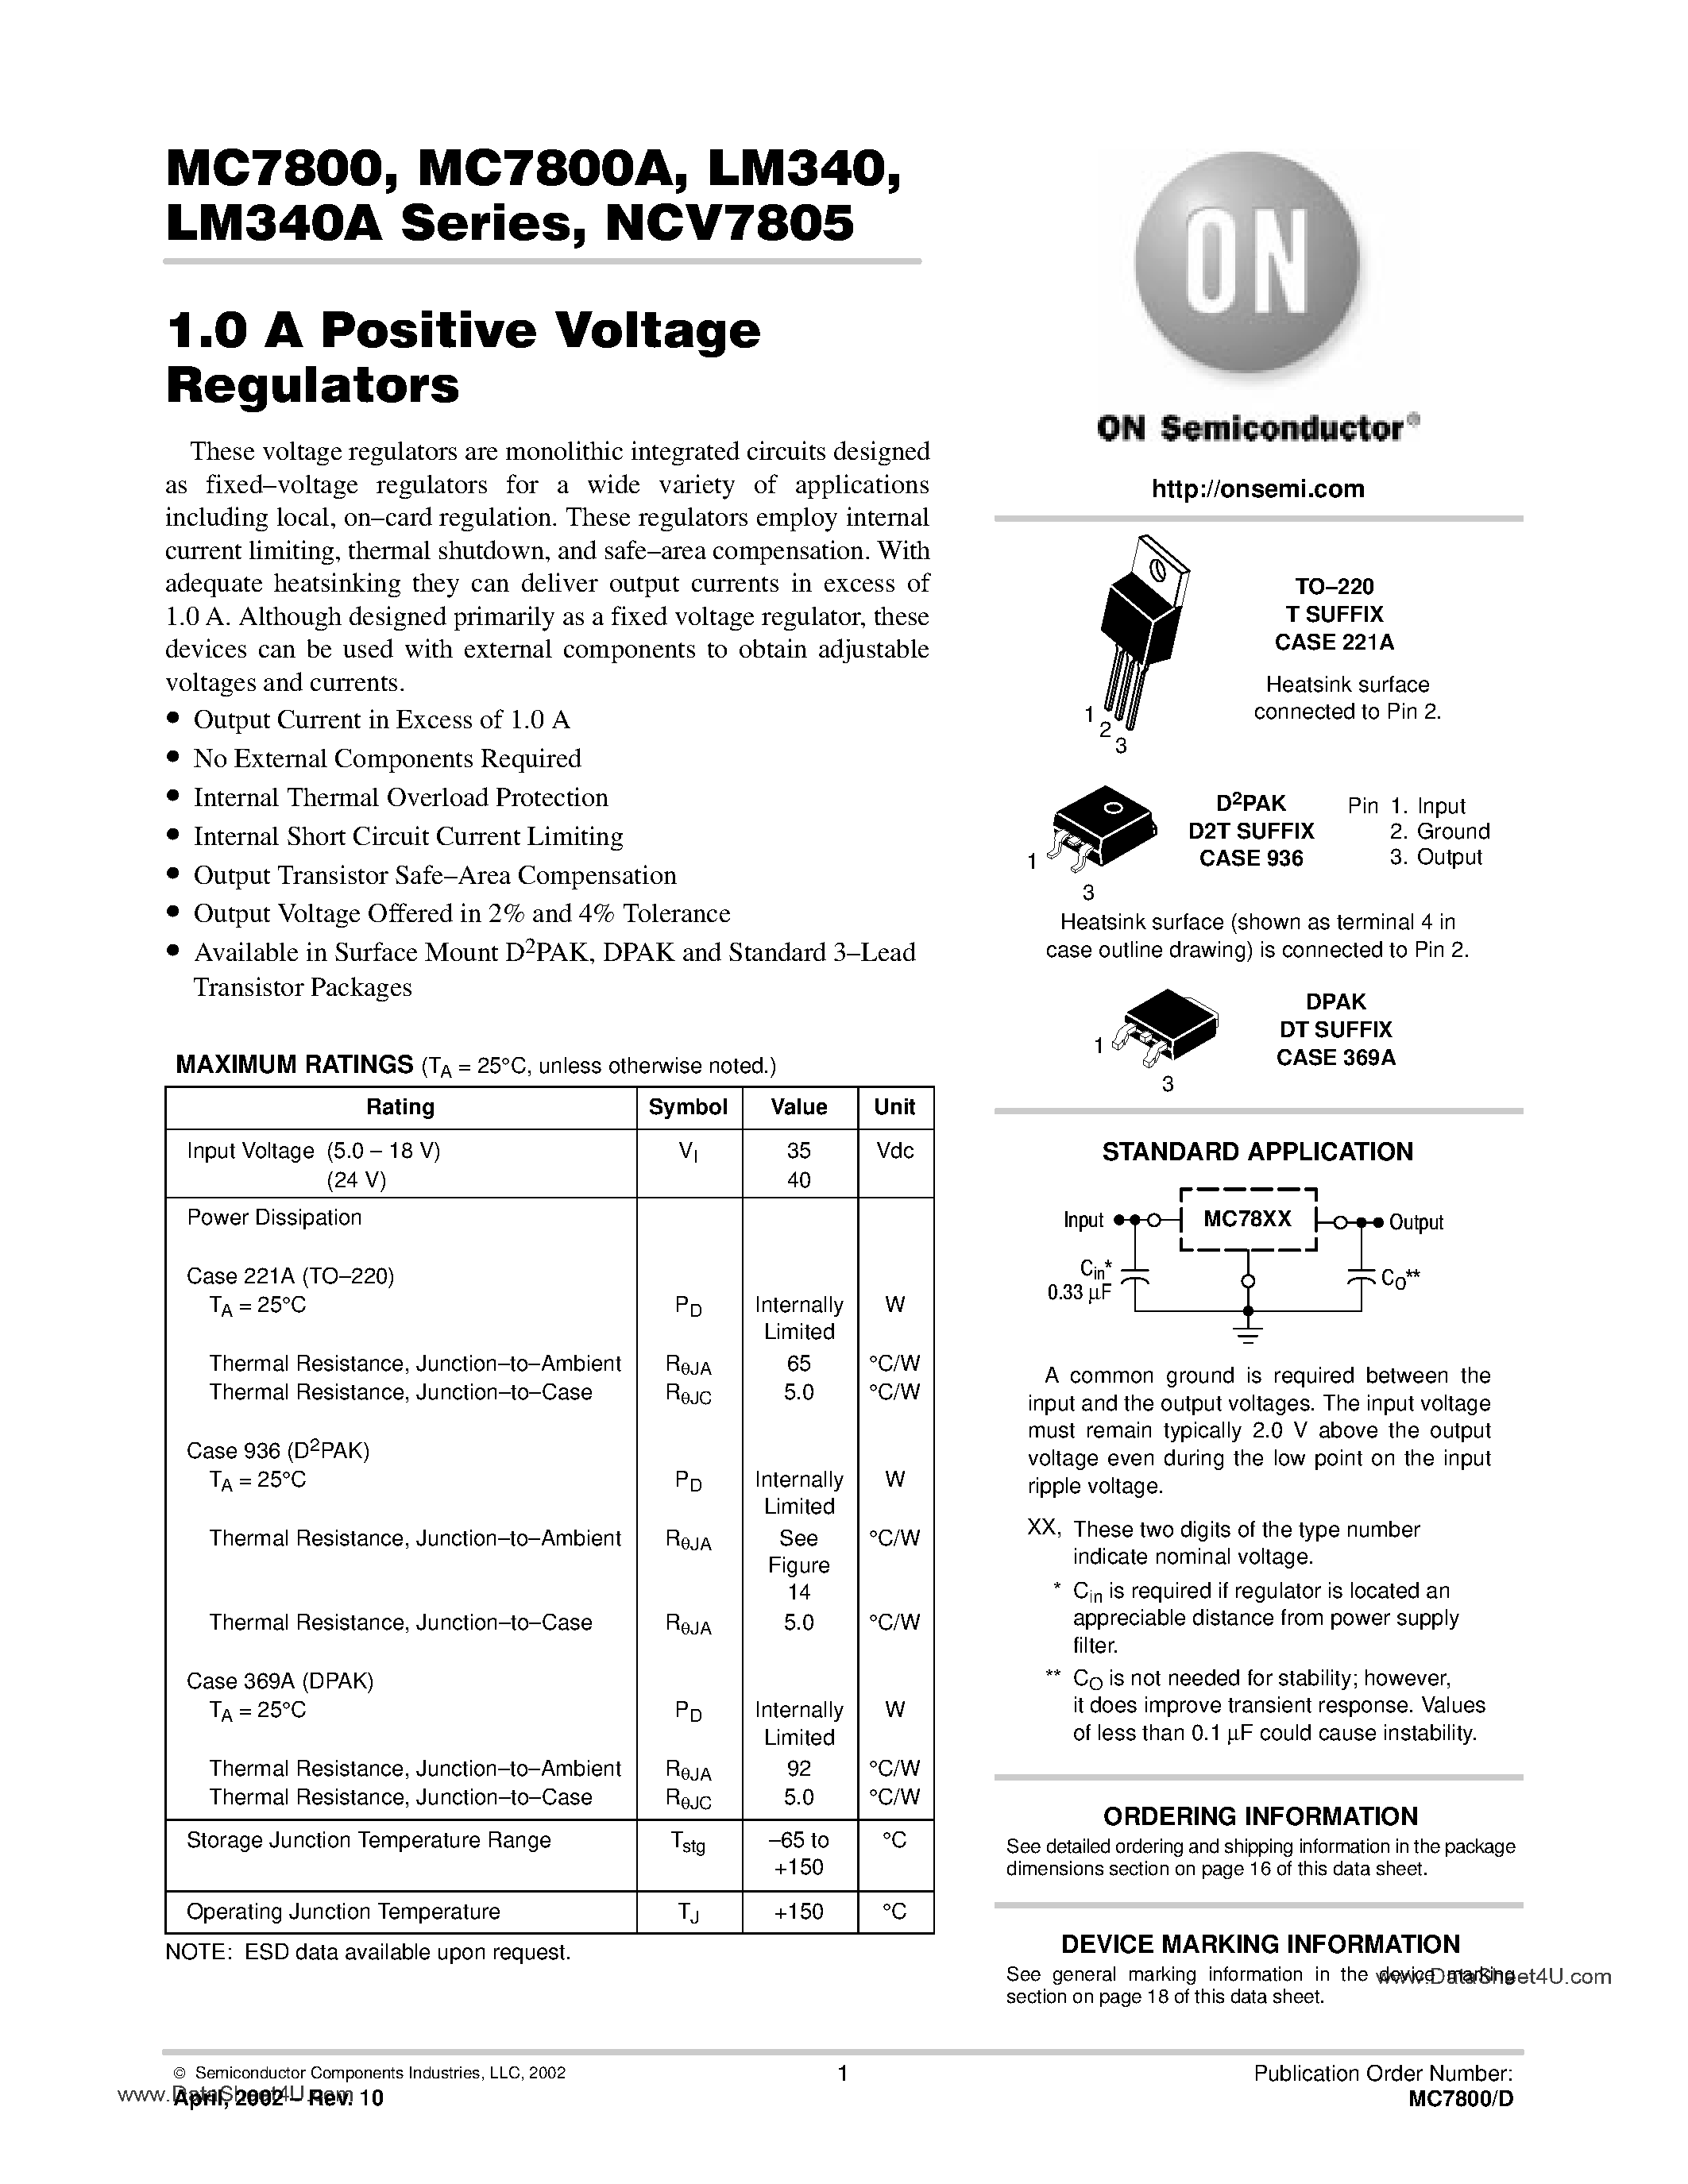 Datasheet MC7808CT - (MC7800x Series) 1A Positive Voltage Regulator page 1